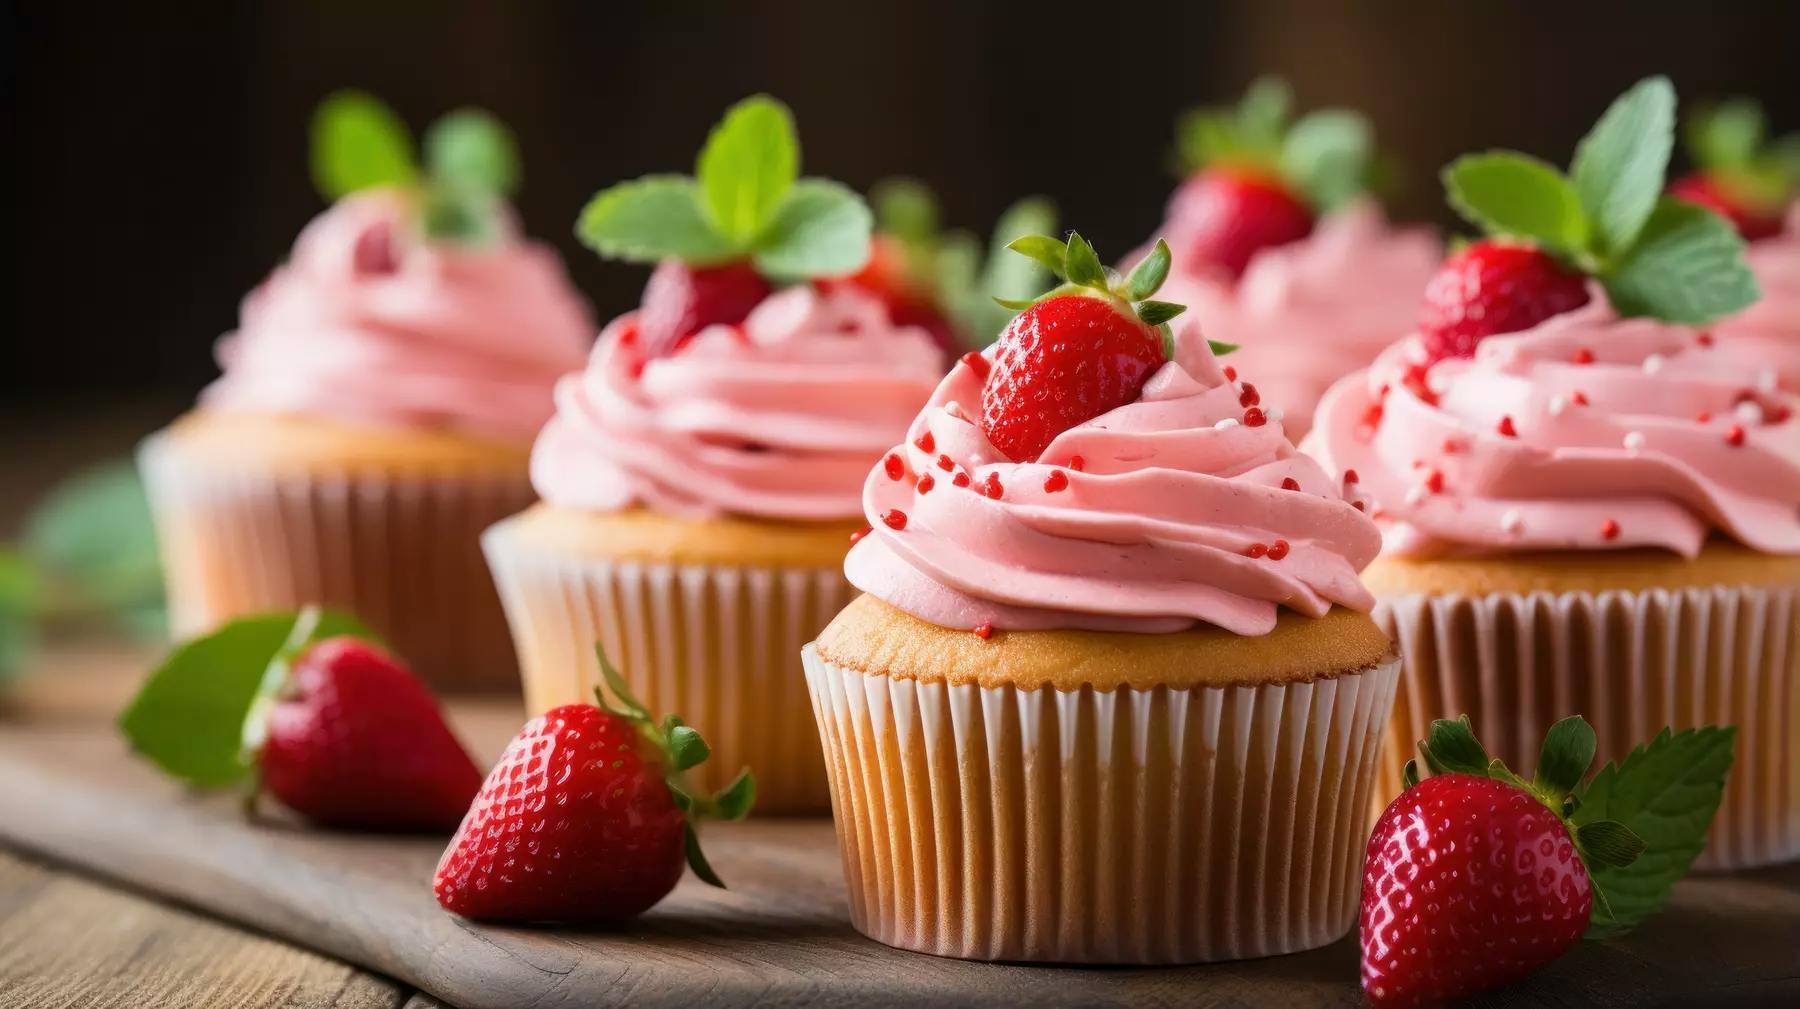 Strawberry cupcakes with fresh strawberry and pink icing / Cupcakes aux fraises avec fraises fraîches et glaçage rose